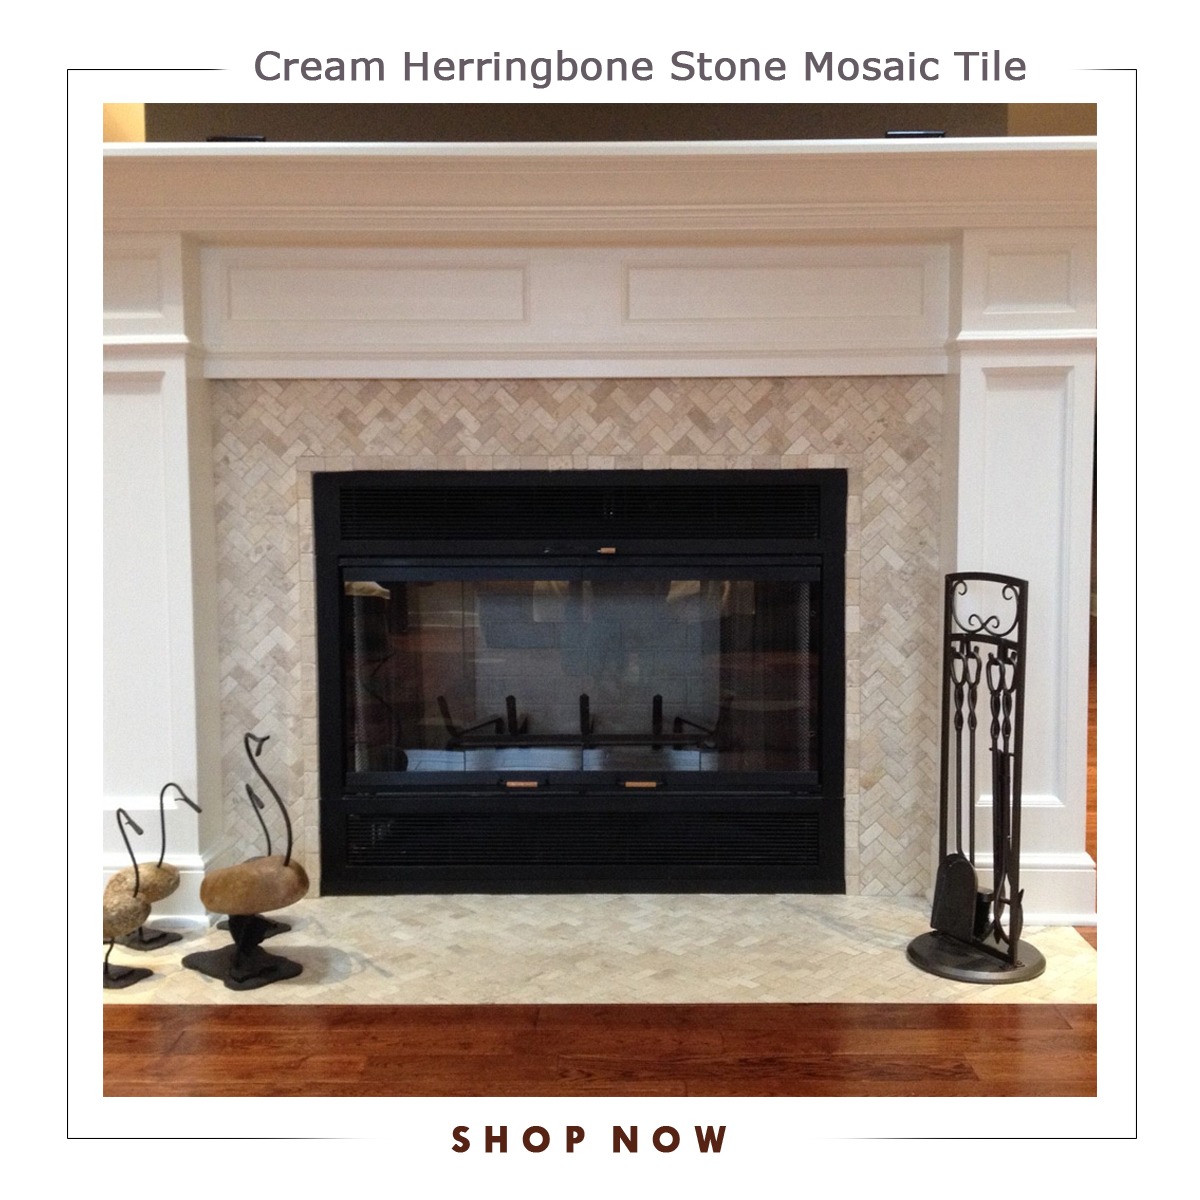  Cream Herringbone Stone Mosaic Tile